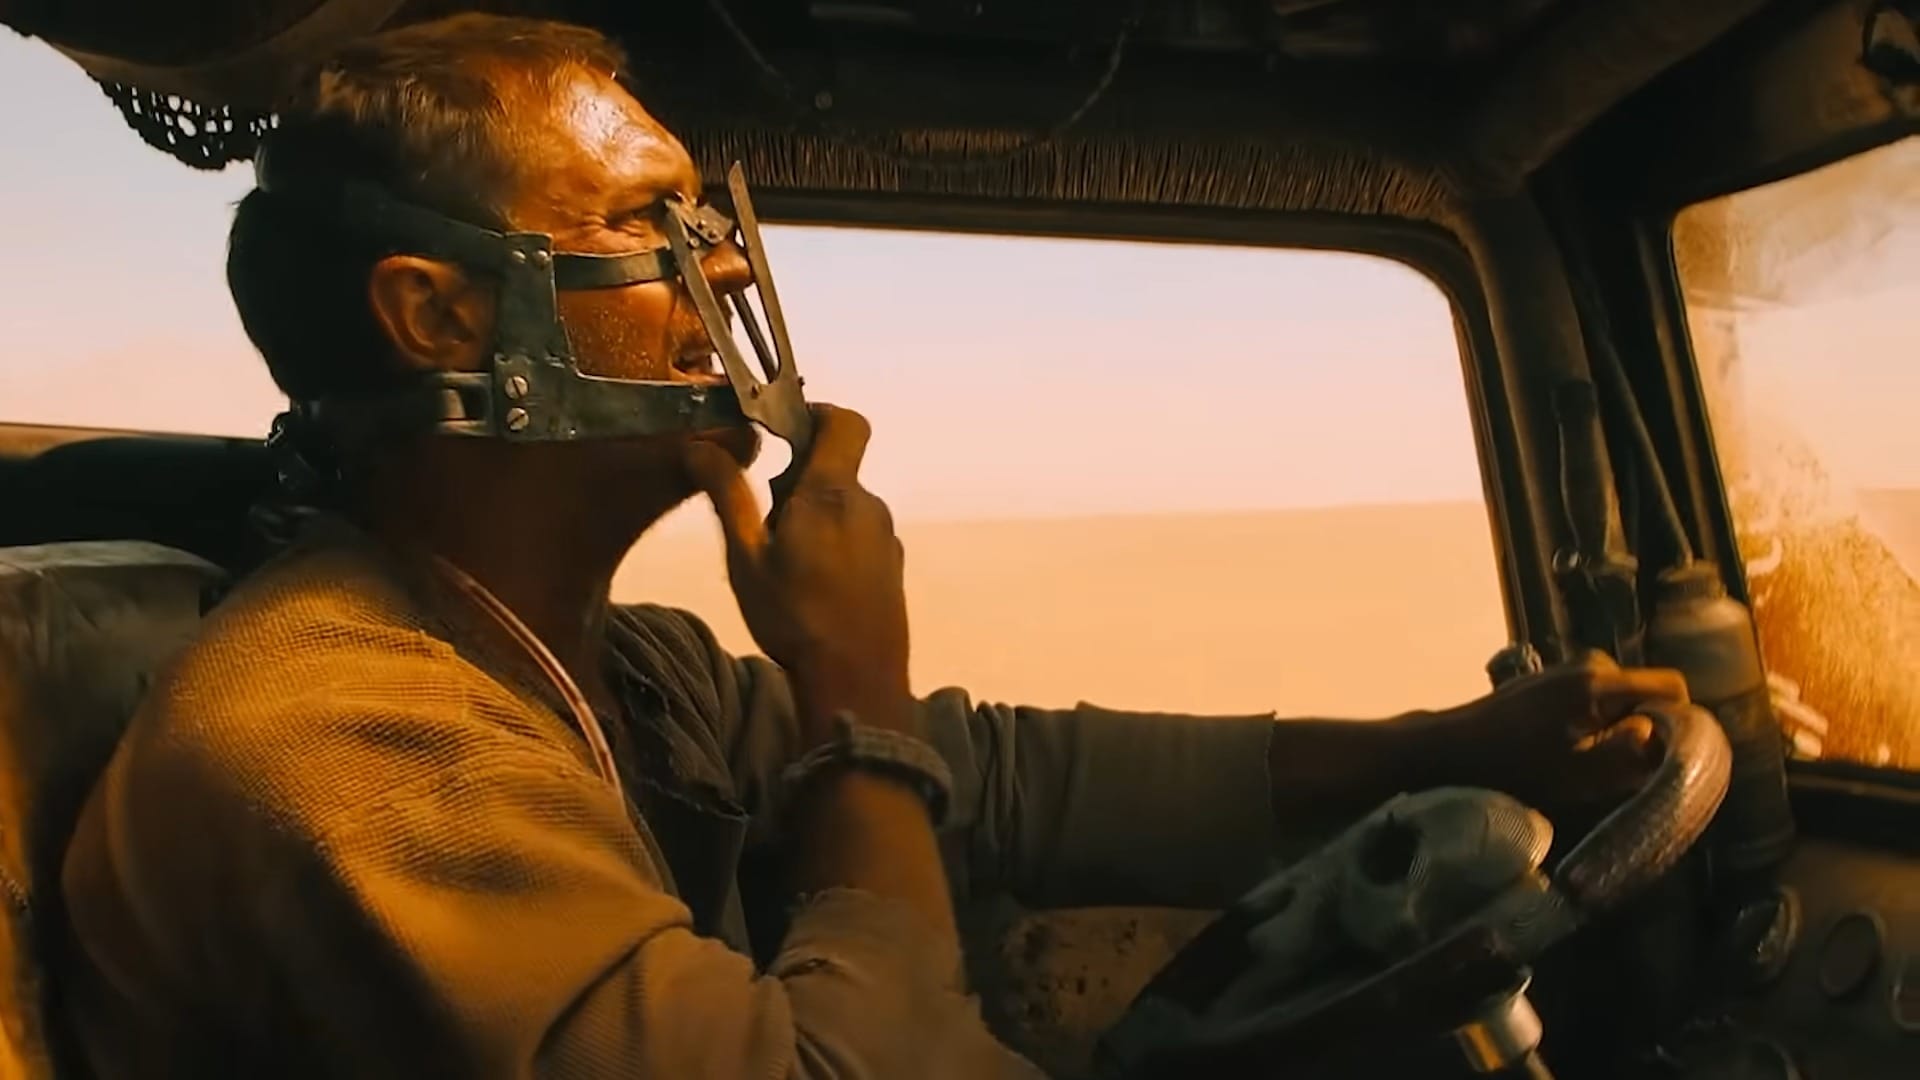 Furiosa: A Mad Max Saga Trailer